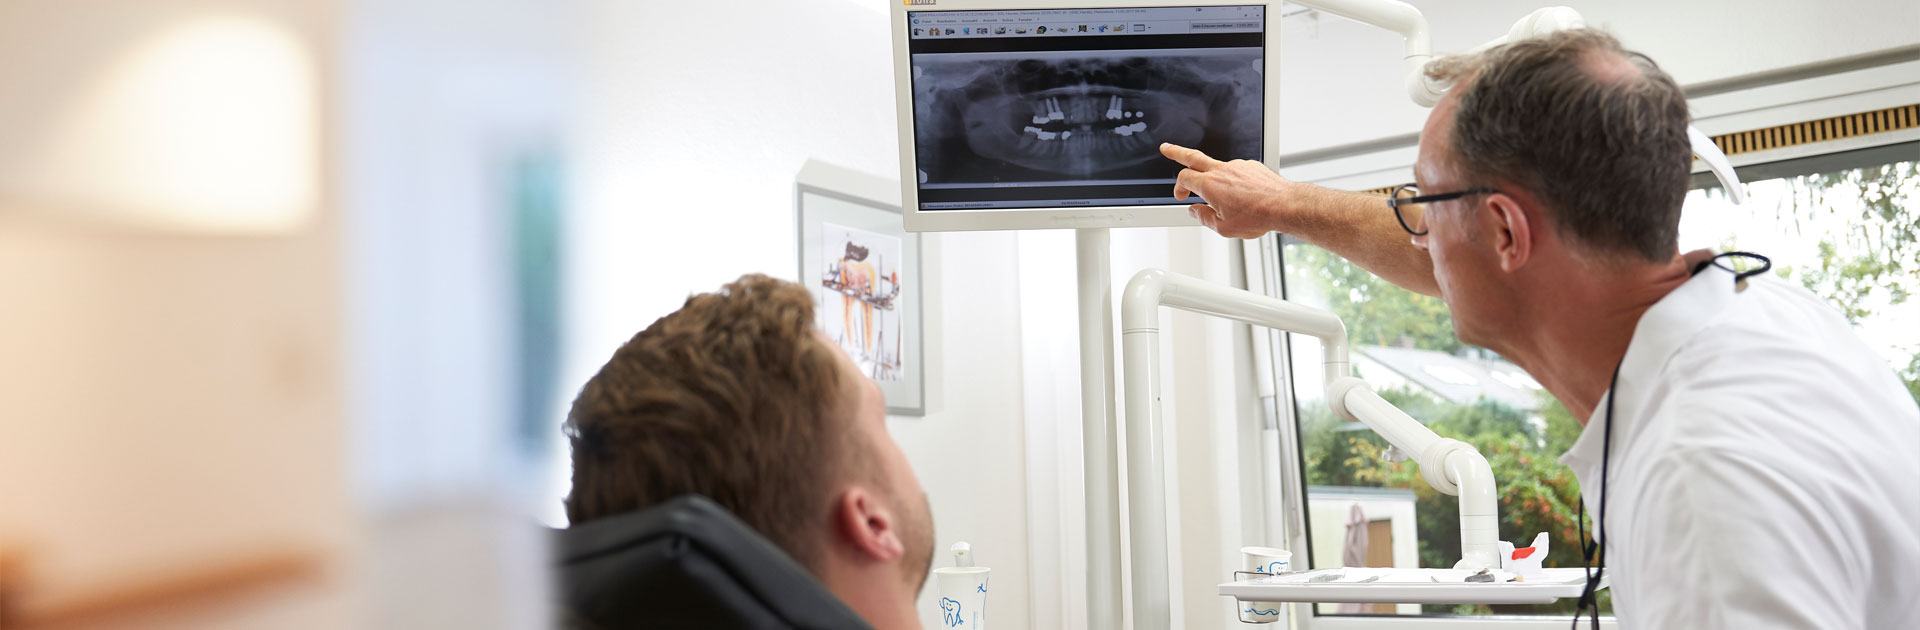 Implantologie Zahnarzt in Norderstedt - Zahnarztpraxis Bergmann